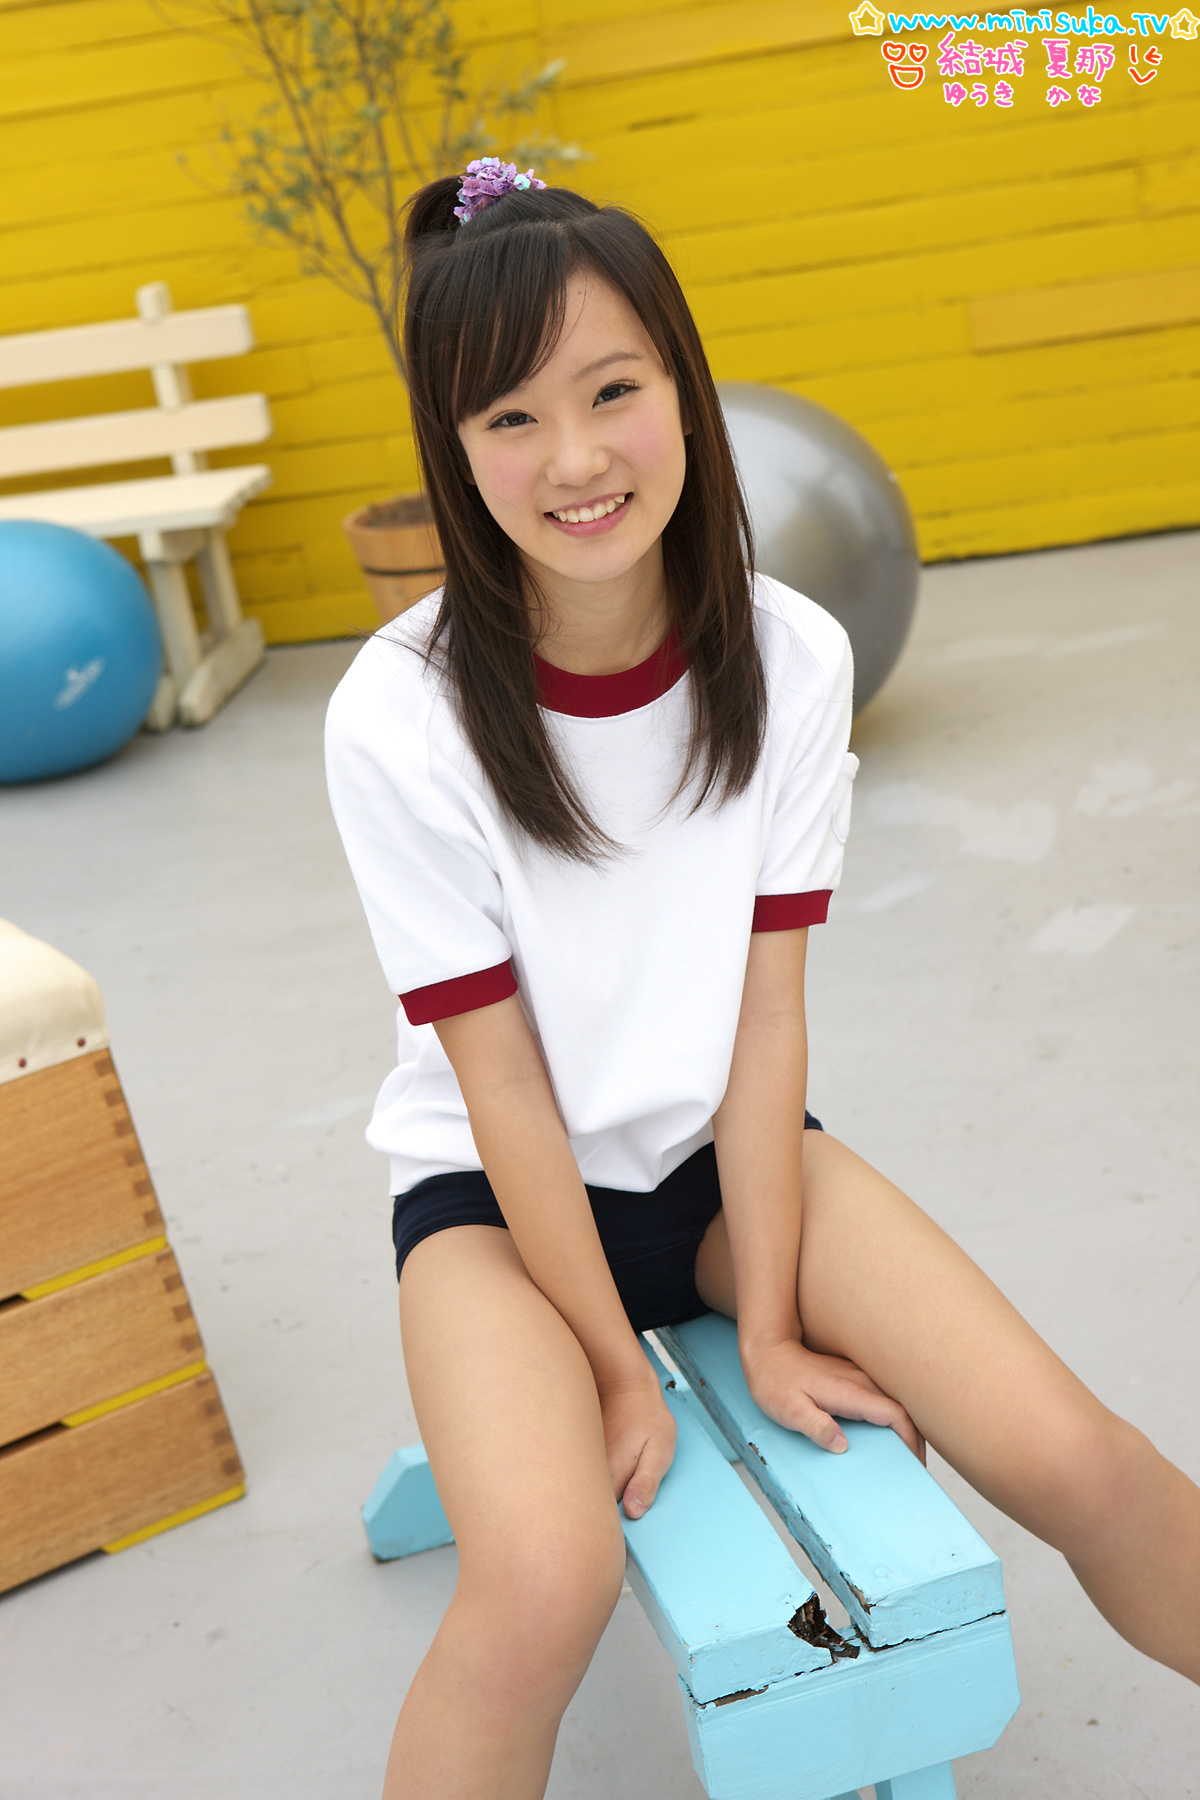 Physical education class uniform Jiecheng Shana[ Minisuka.tv ]Female high school students in active service